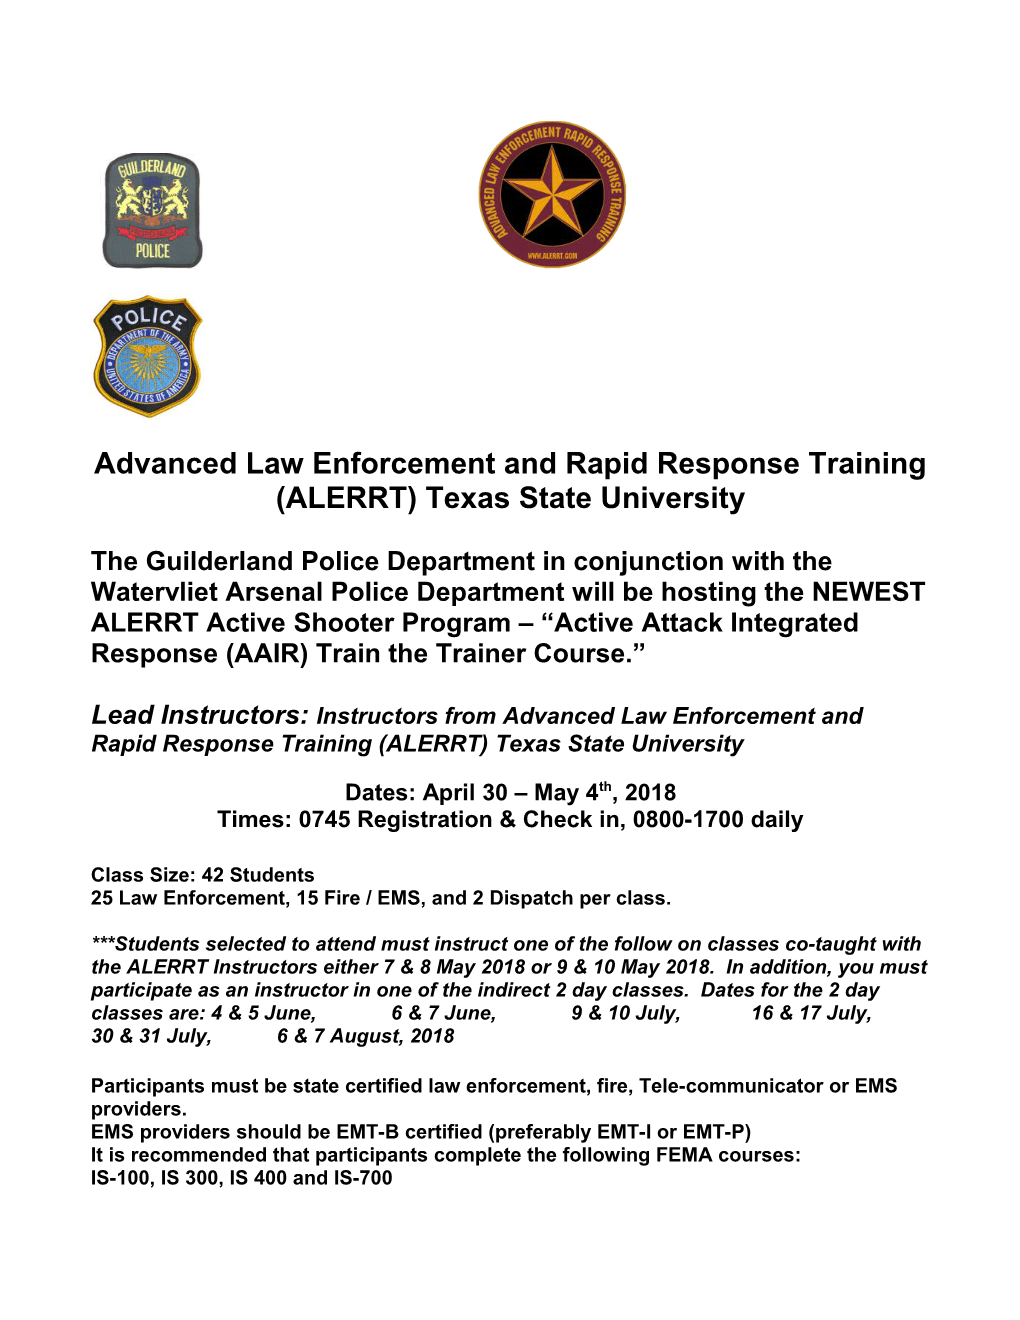 Advanced Law Enforcement and Rapid Response Training (ALERRT) Texas State University